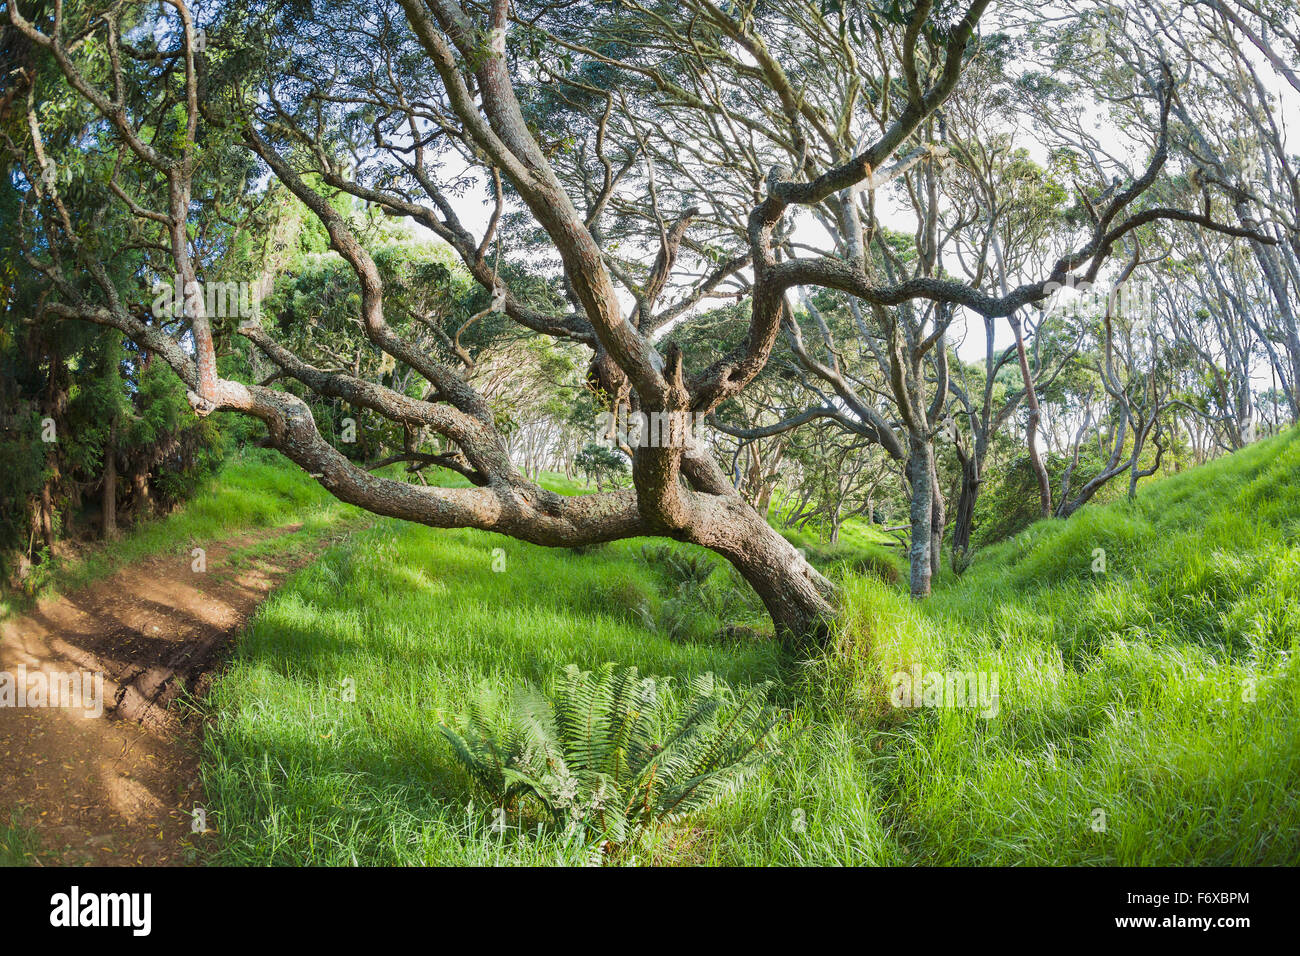 Koa trees (Koa acacia) in Keanakolu State Park along Mana Road; Keanakolu, Island of Hawaii, Hawaii, United States of America Stock Photo